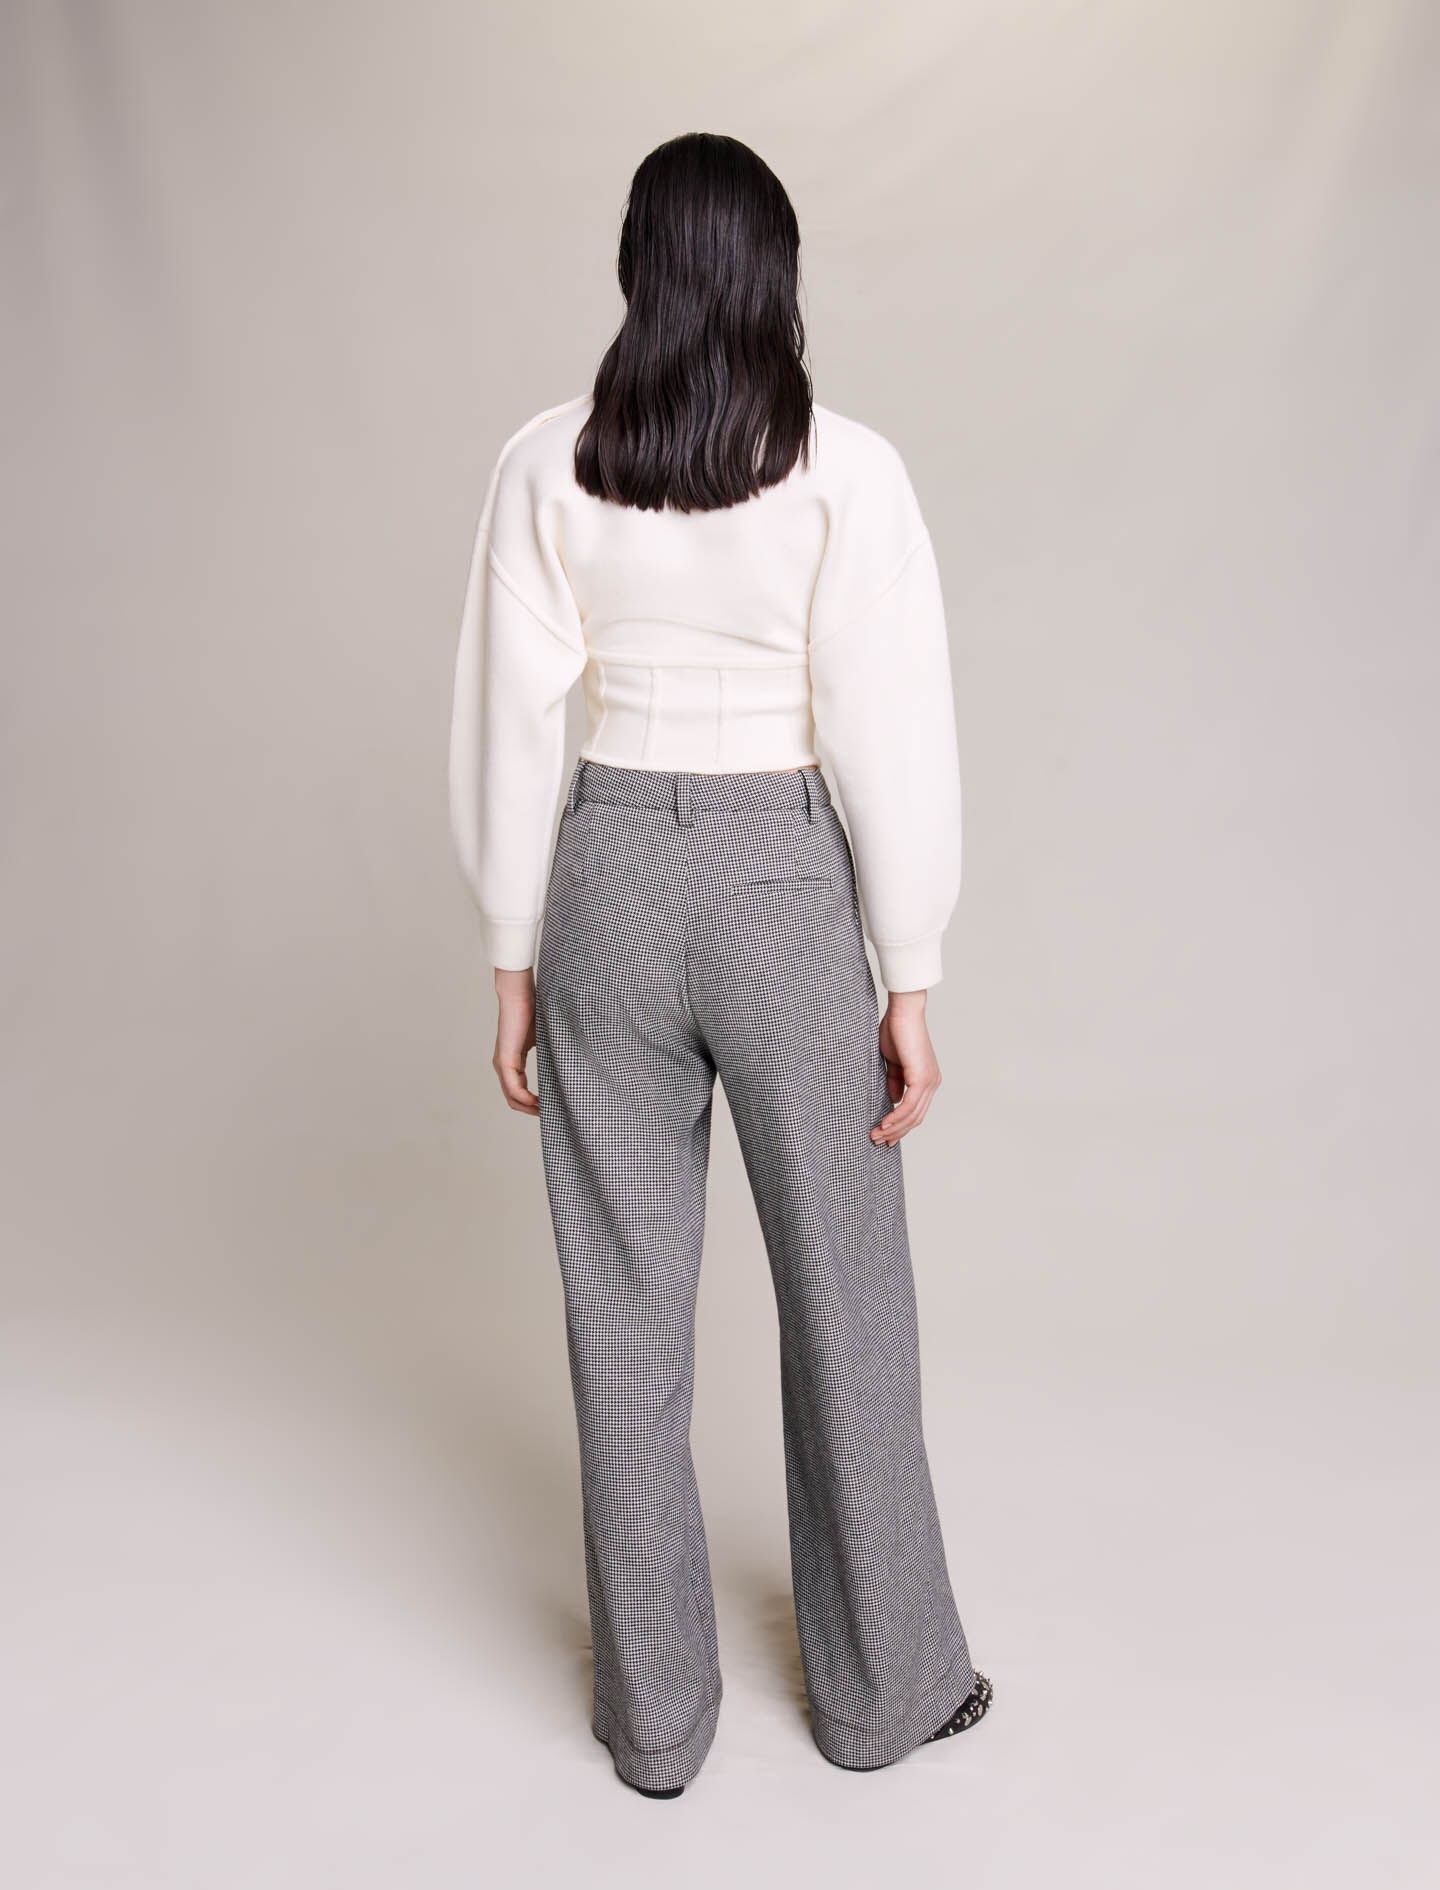 Zara Men's Jogger Fit Side-stripe Tuxedo Trousers Pants L | Mens joggers,  Zara man, Fashion joggers